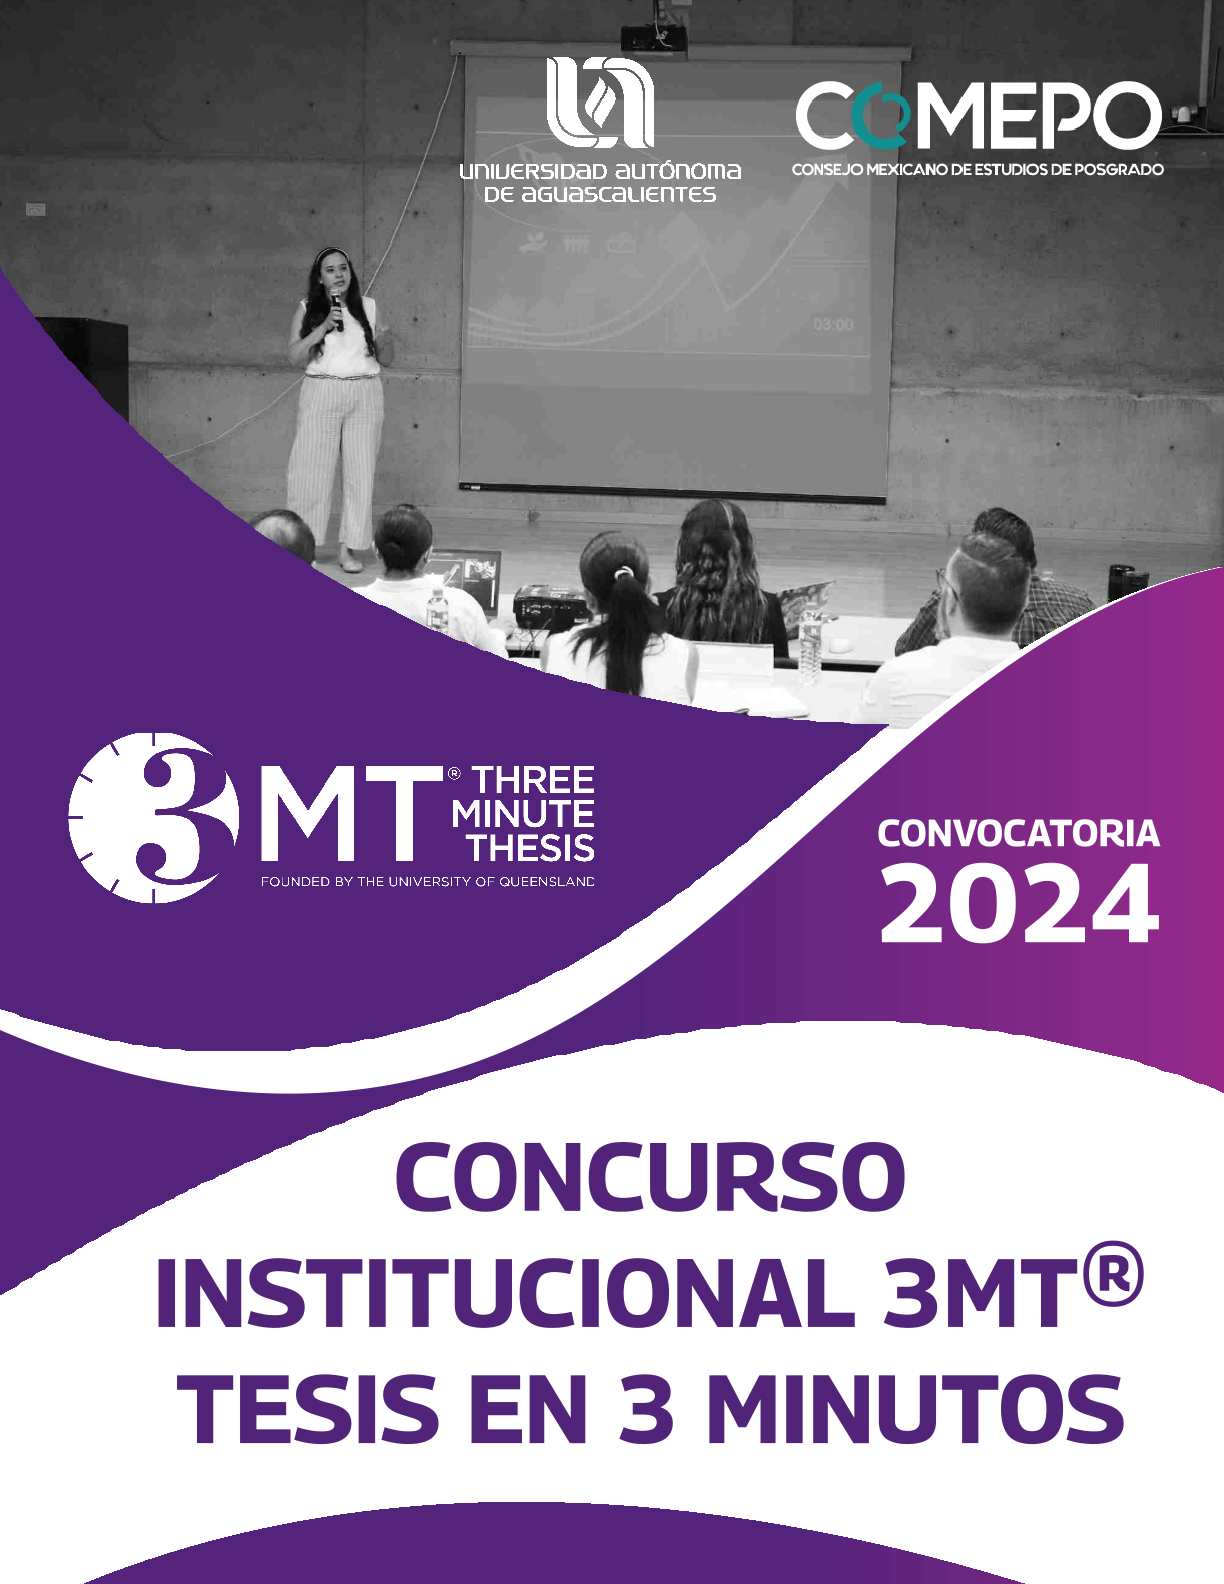 Concurso Institucional 3MT (Tesis en Tres Minutos)